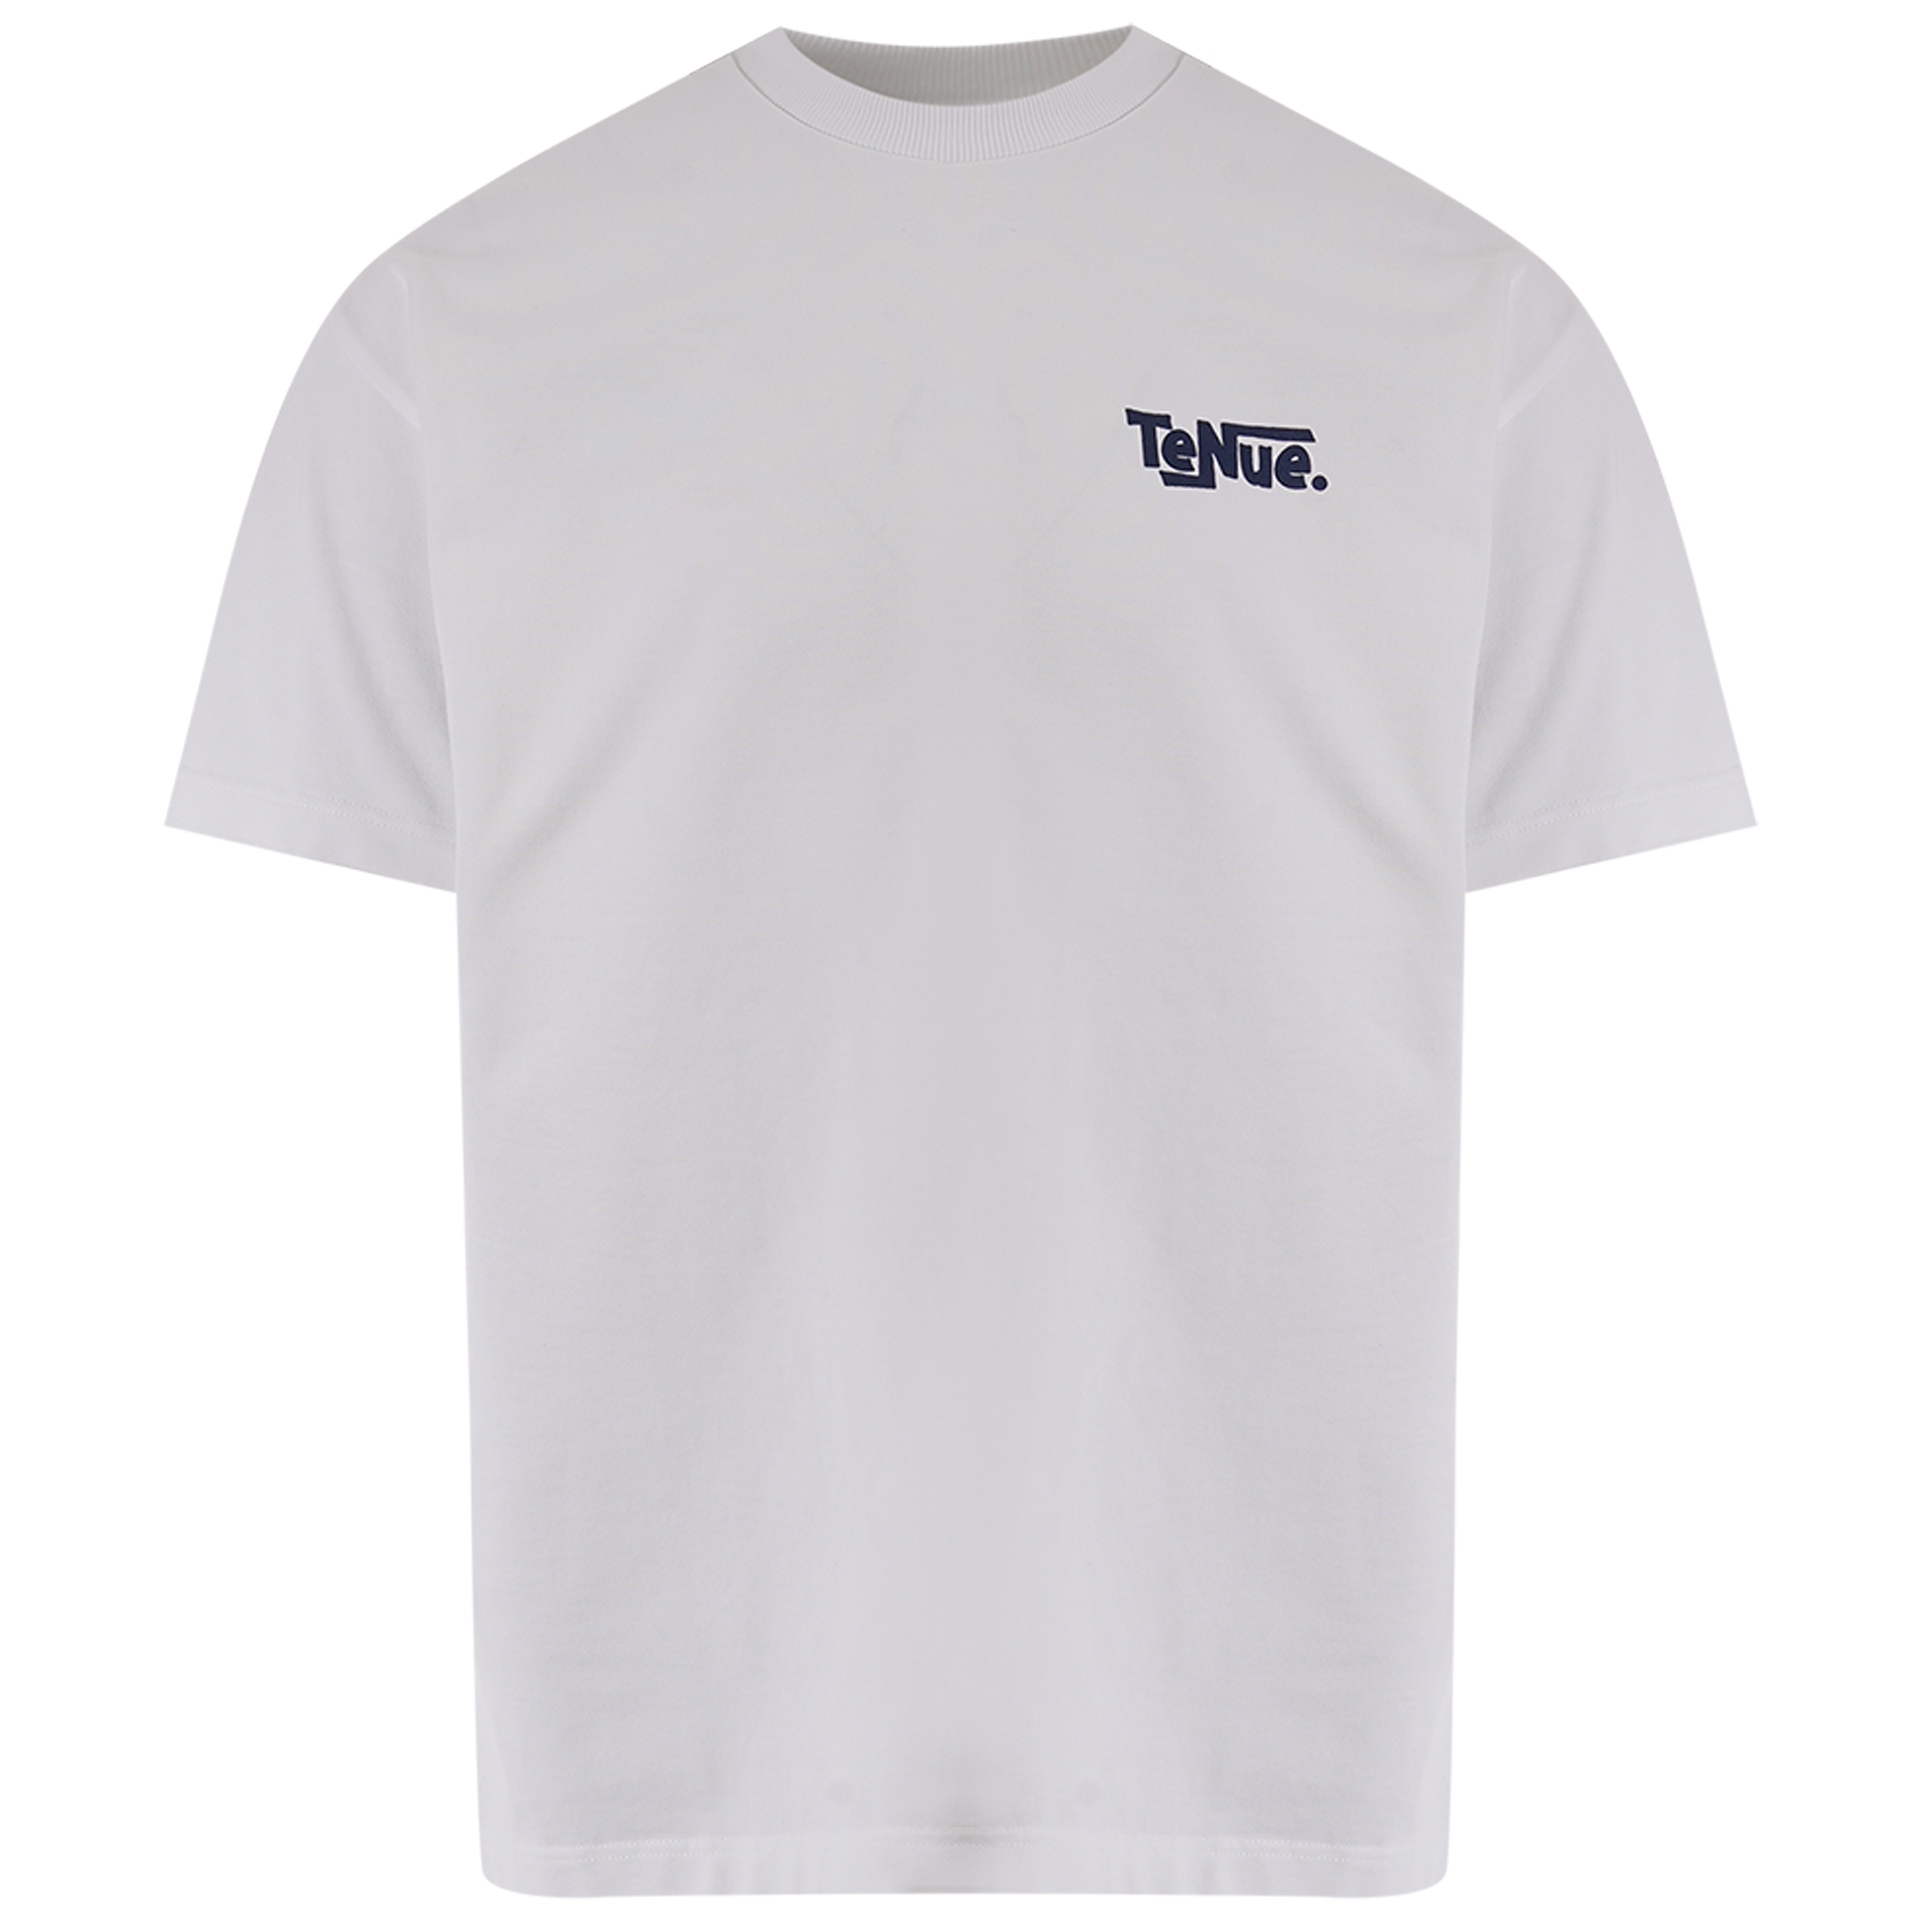 Tenue. T-shirt Bruce WW logo 1